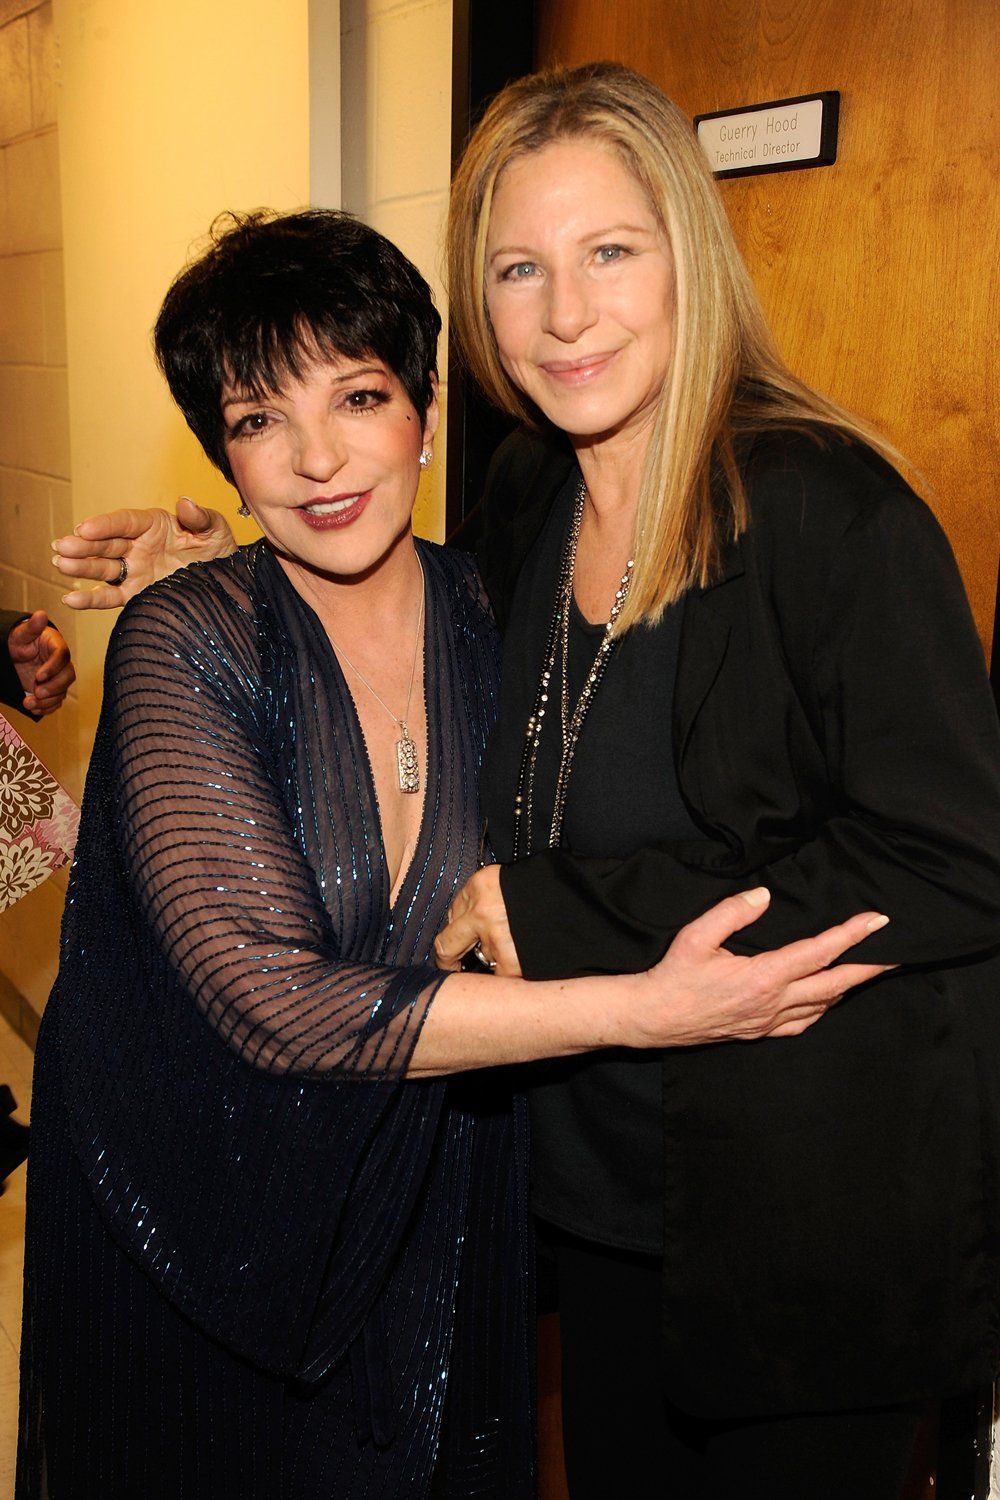 Liza Minnelli and Barbra Streisand pose backstage at the Marvin Hamlisch memorial concert.